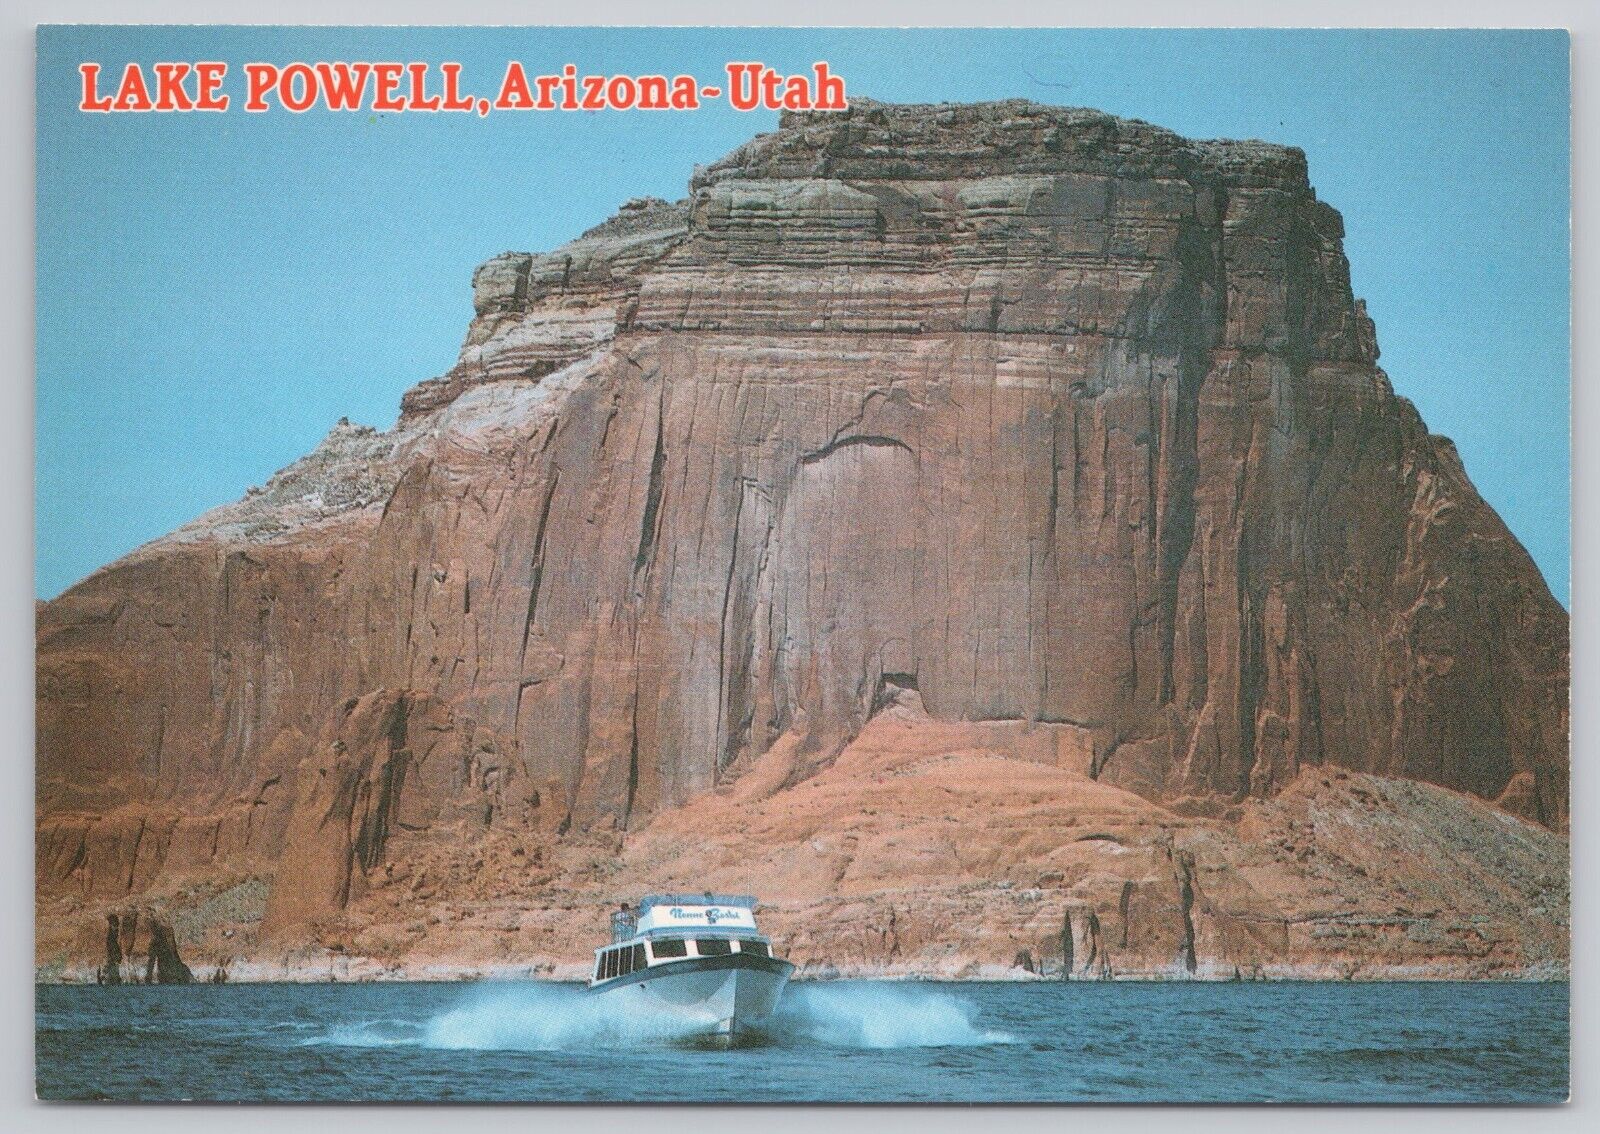 Lake Powell Arizona Utah, Tour Boat, Vintage Postcard